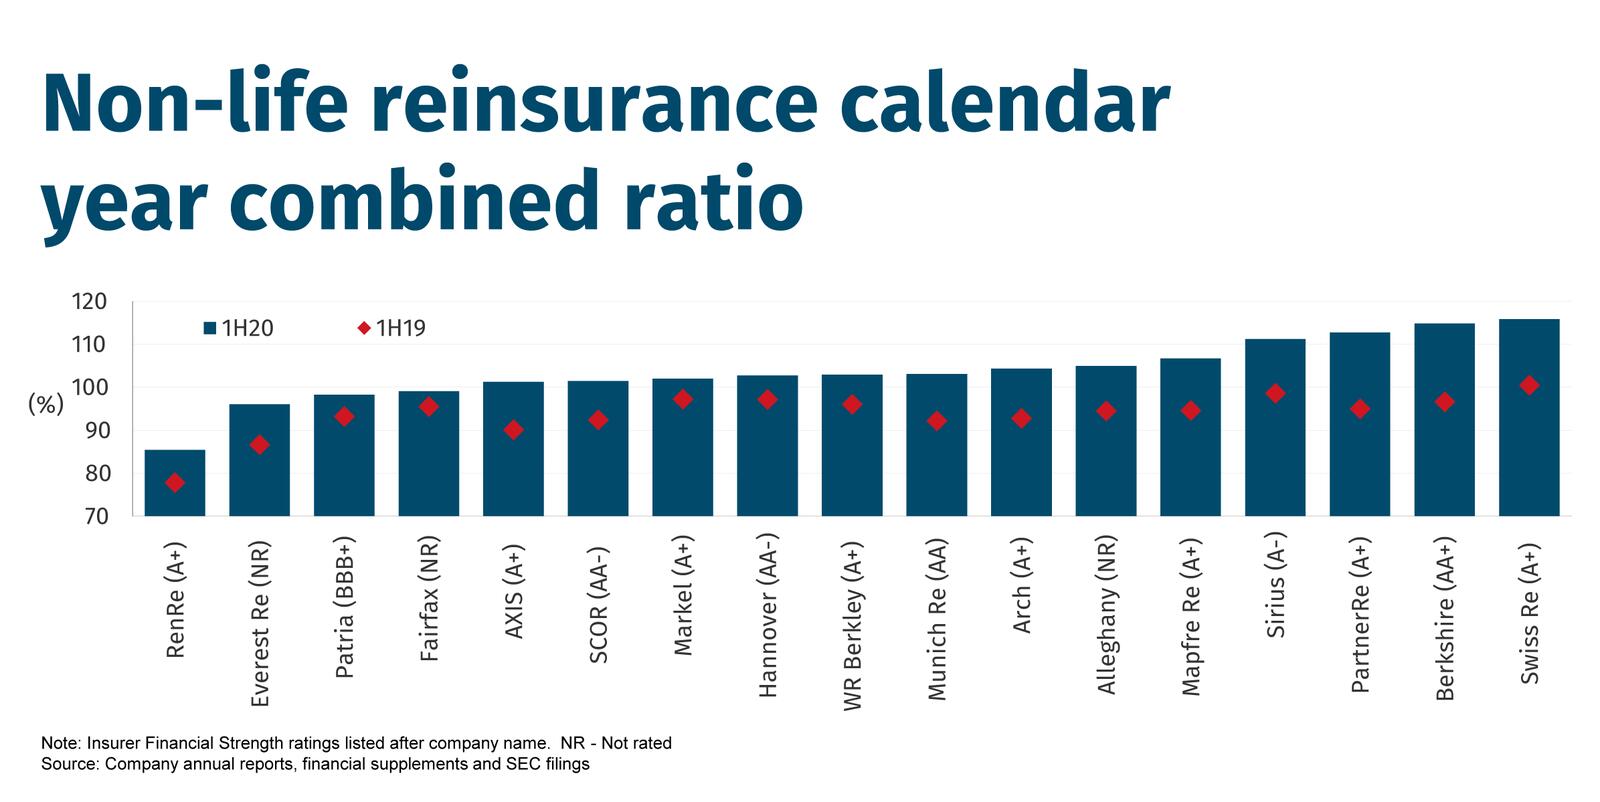 Non-life reinsurance calendar year combined ratio